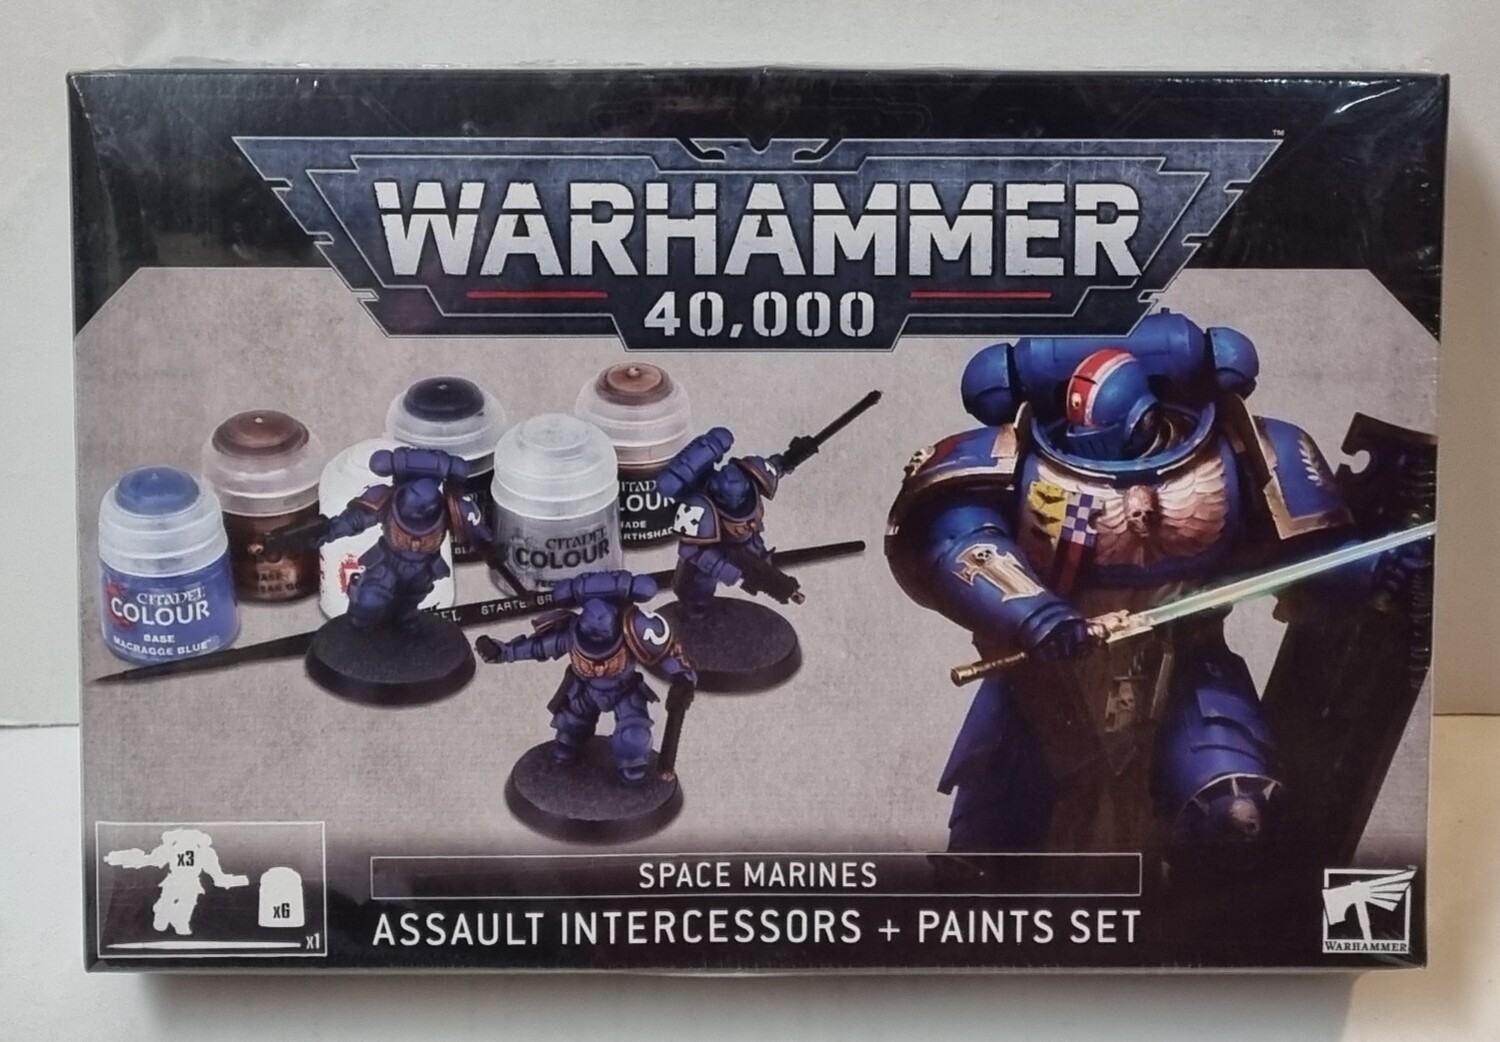 Warhammer, 40k, 60-11, Space Marines: Assault Intercessors + Paints set